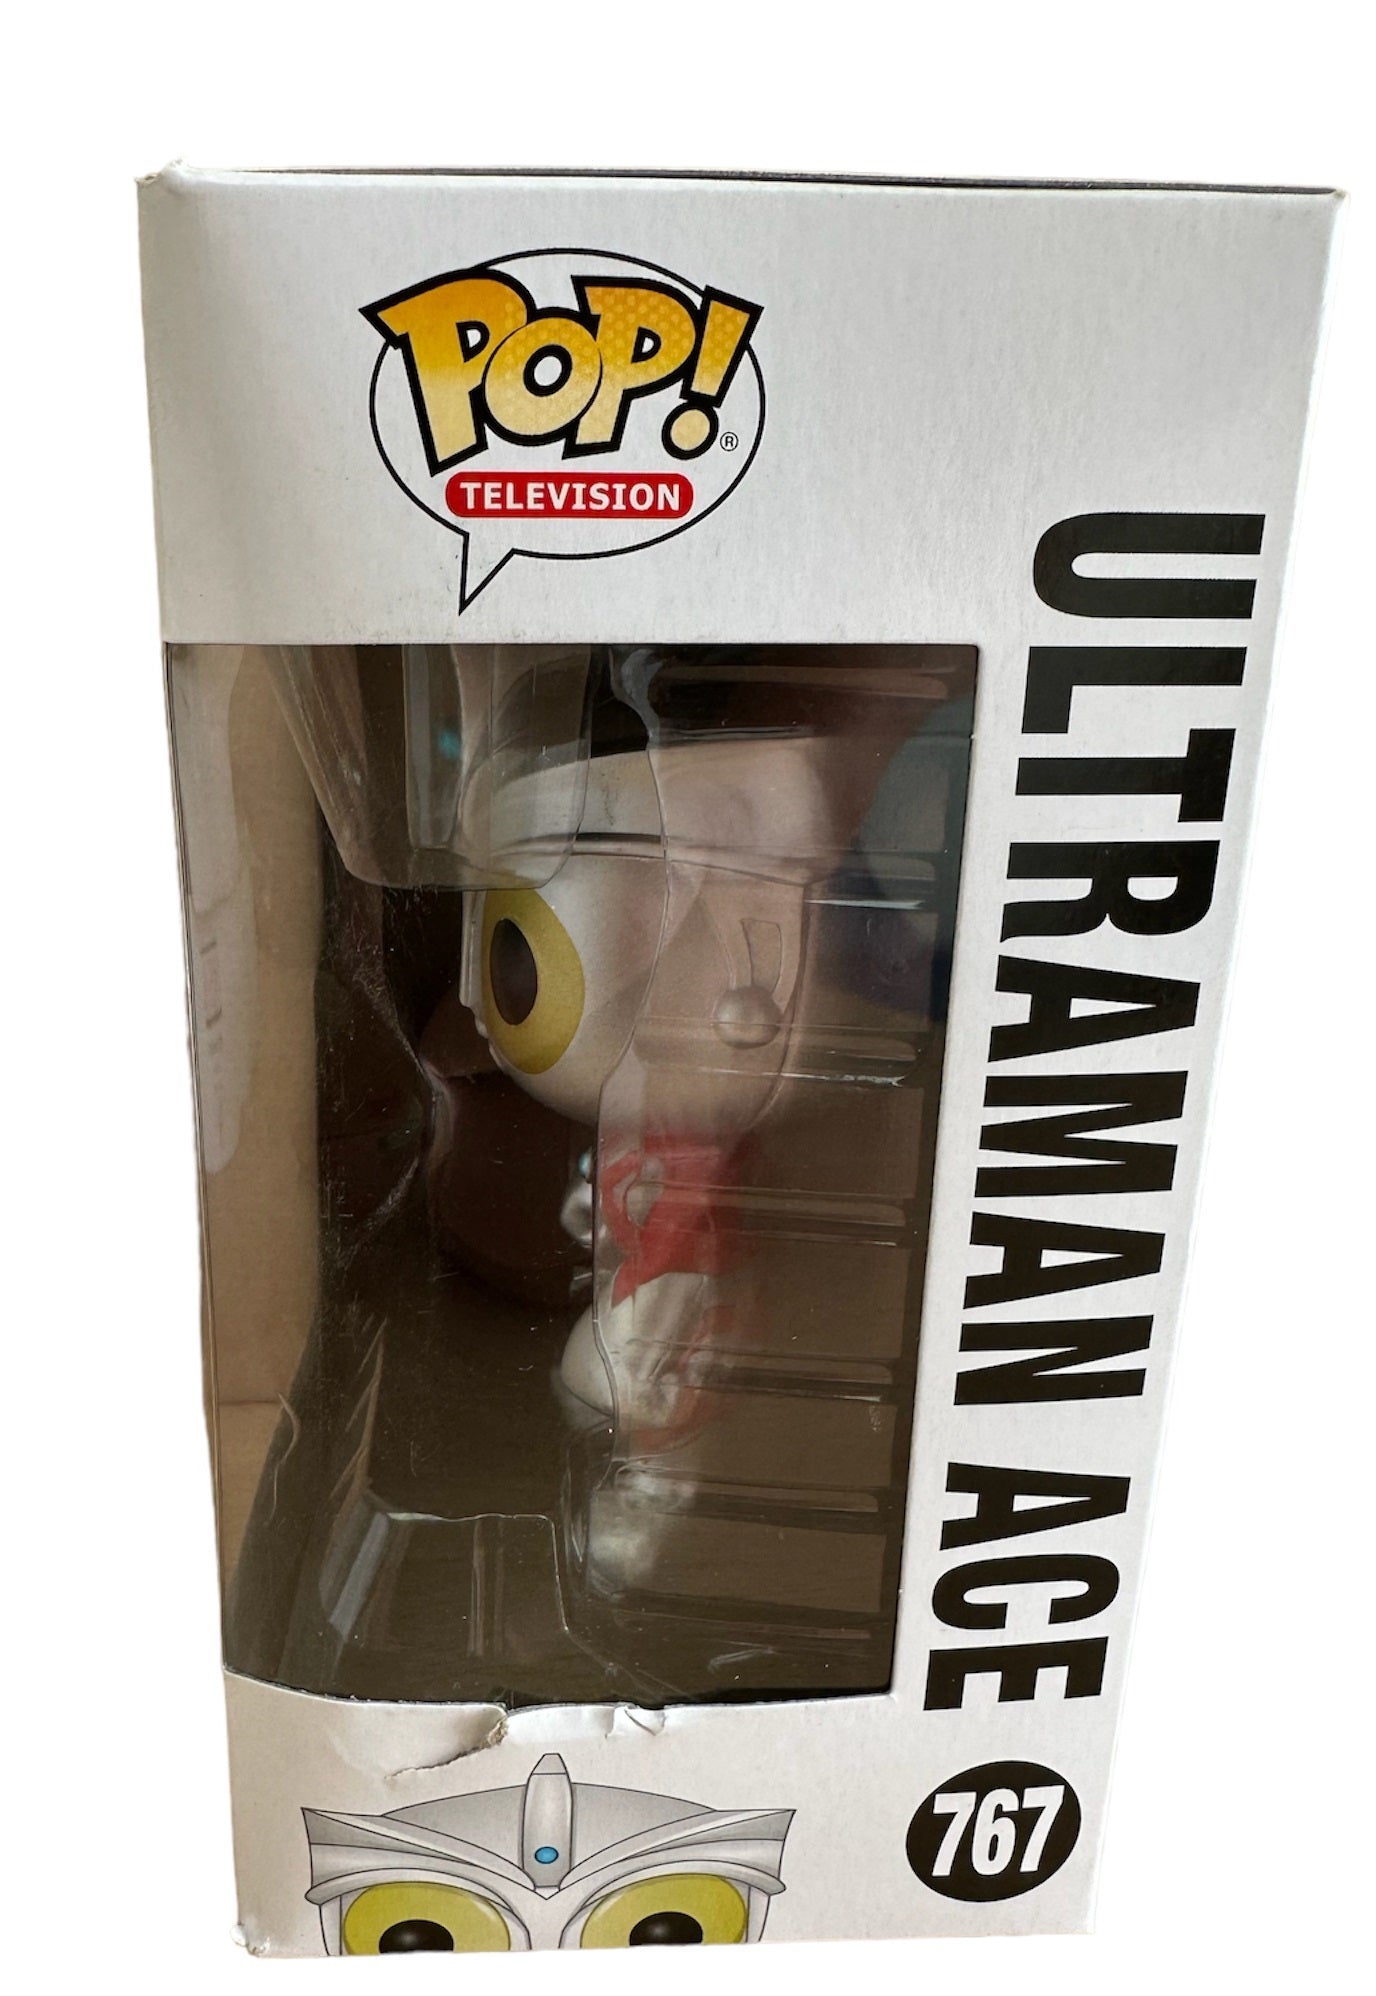 POP! Television 2018 Ultraman Funko Pop Vinyl Figures - Ultraman Ace No. 767 Vinyl Figure - Brand New Shop Stock Room Find